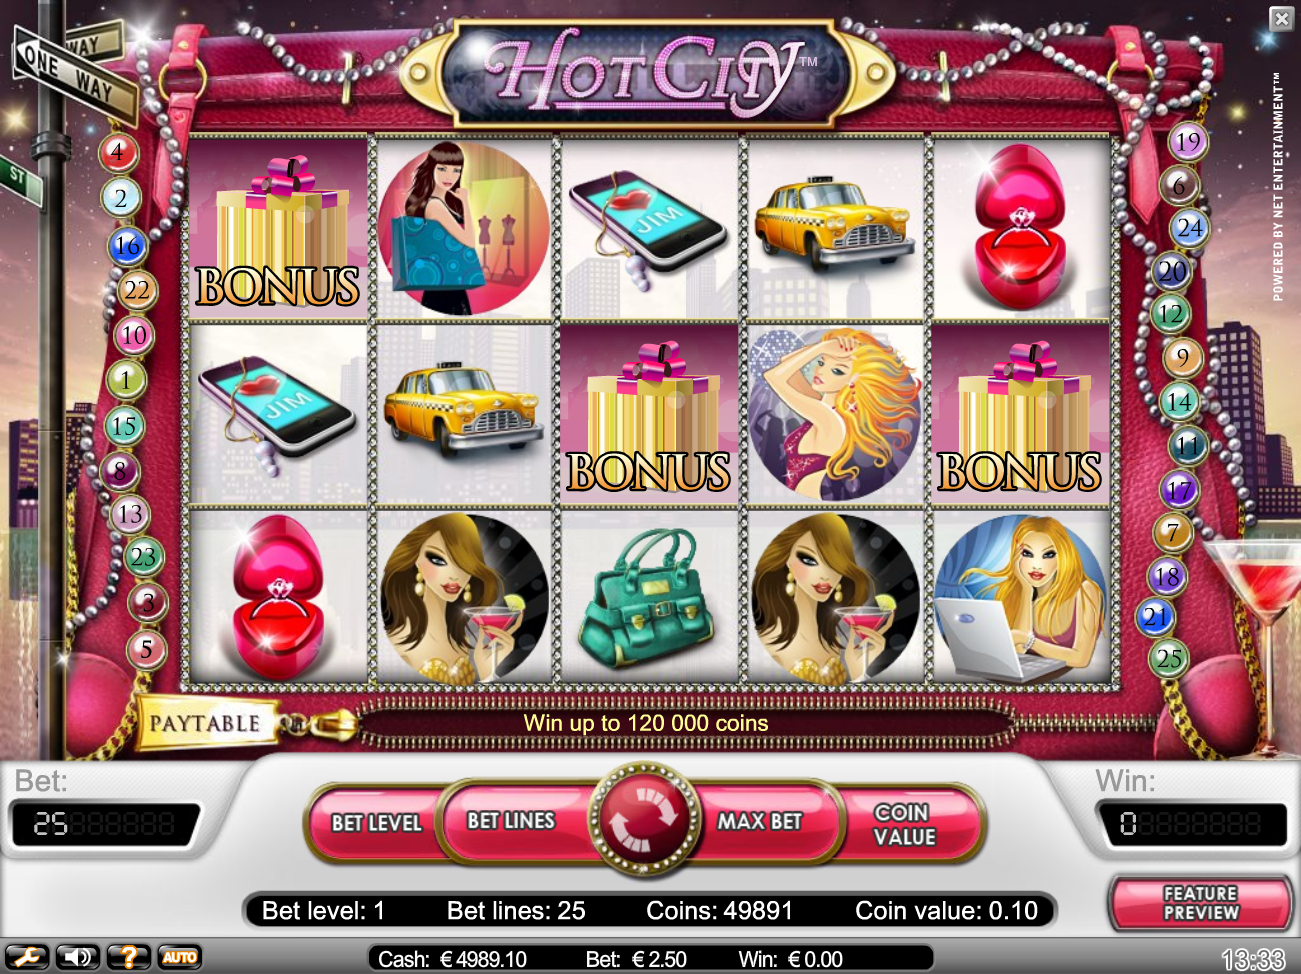 Hot City (Hot City) from category Slots